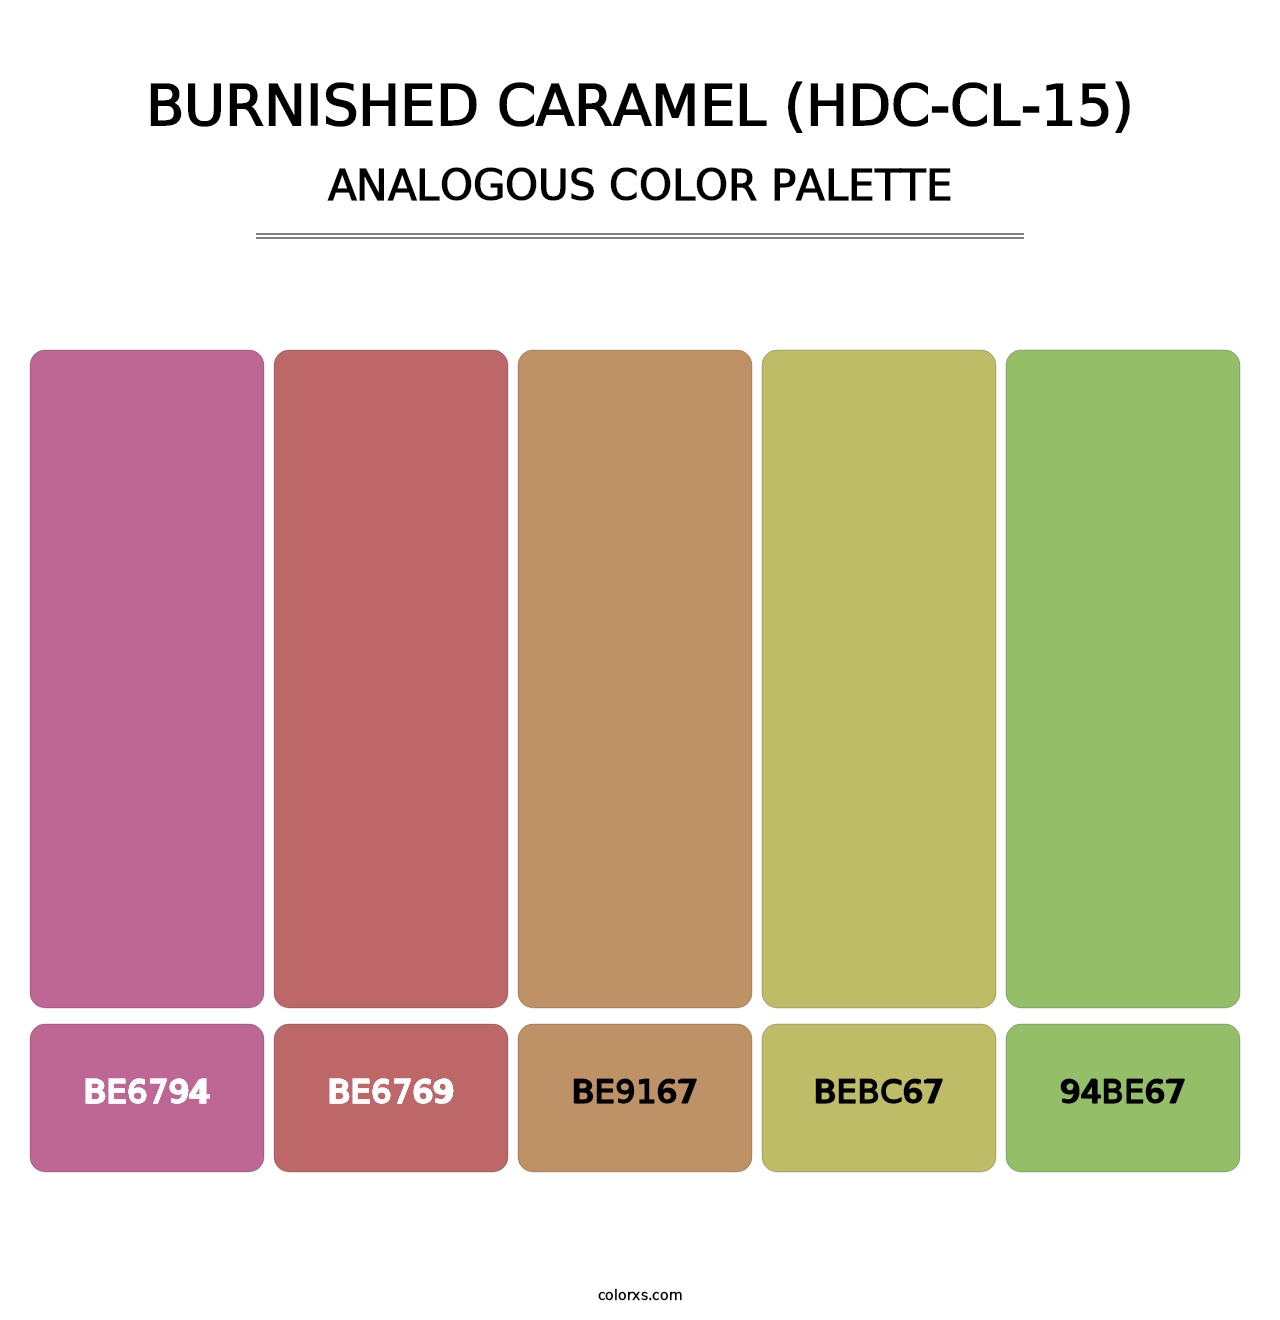 Burnished Caramel (HDC-CL-15) - Analogous Color Palette